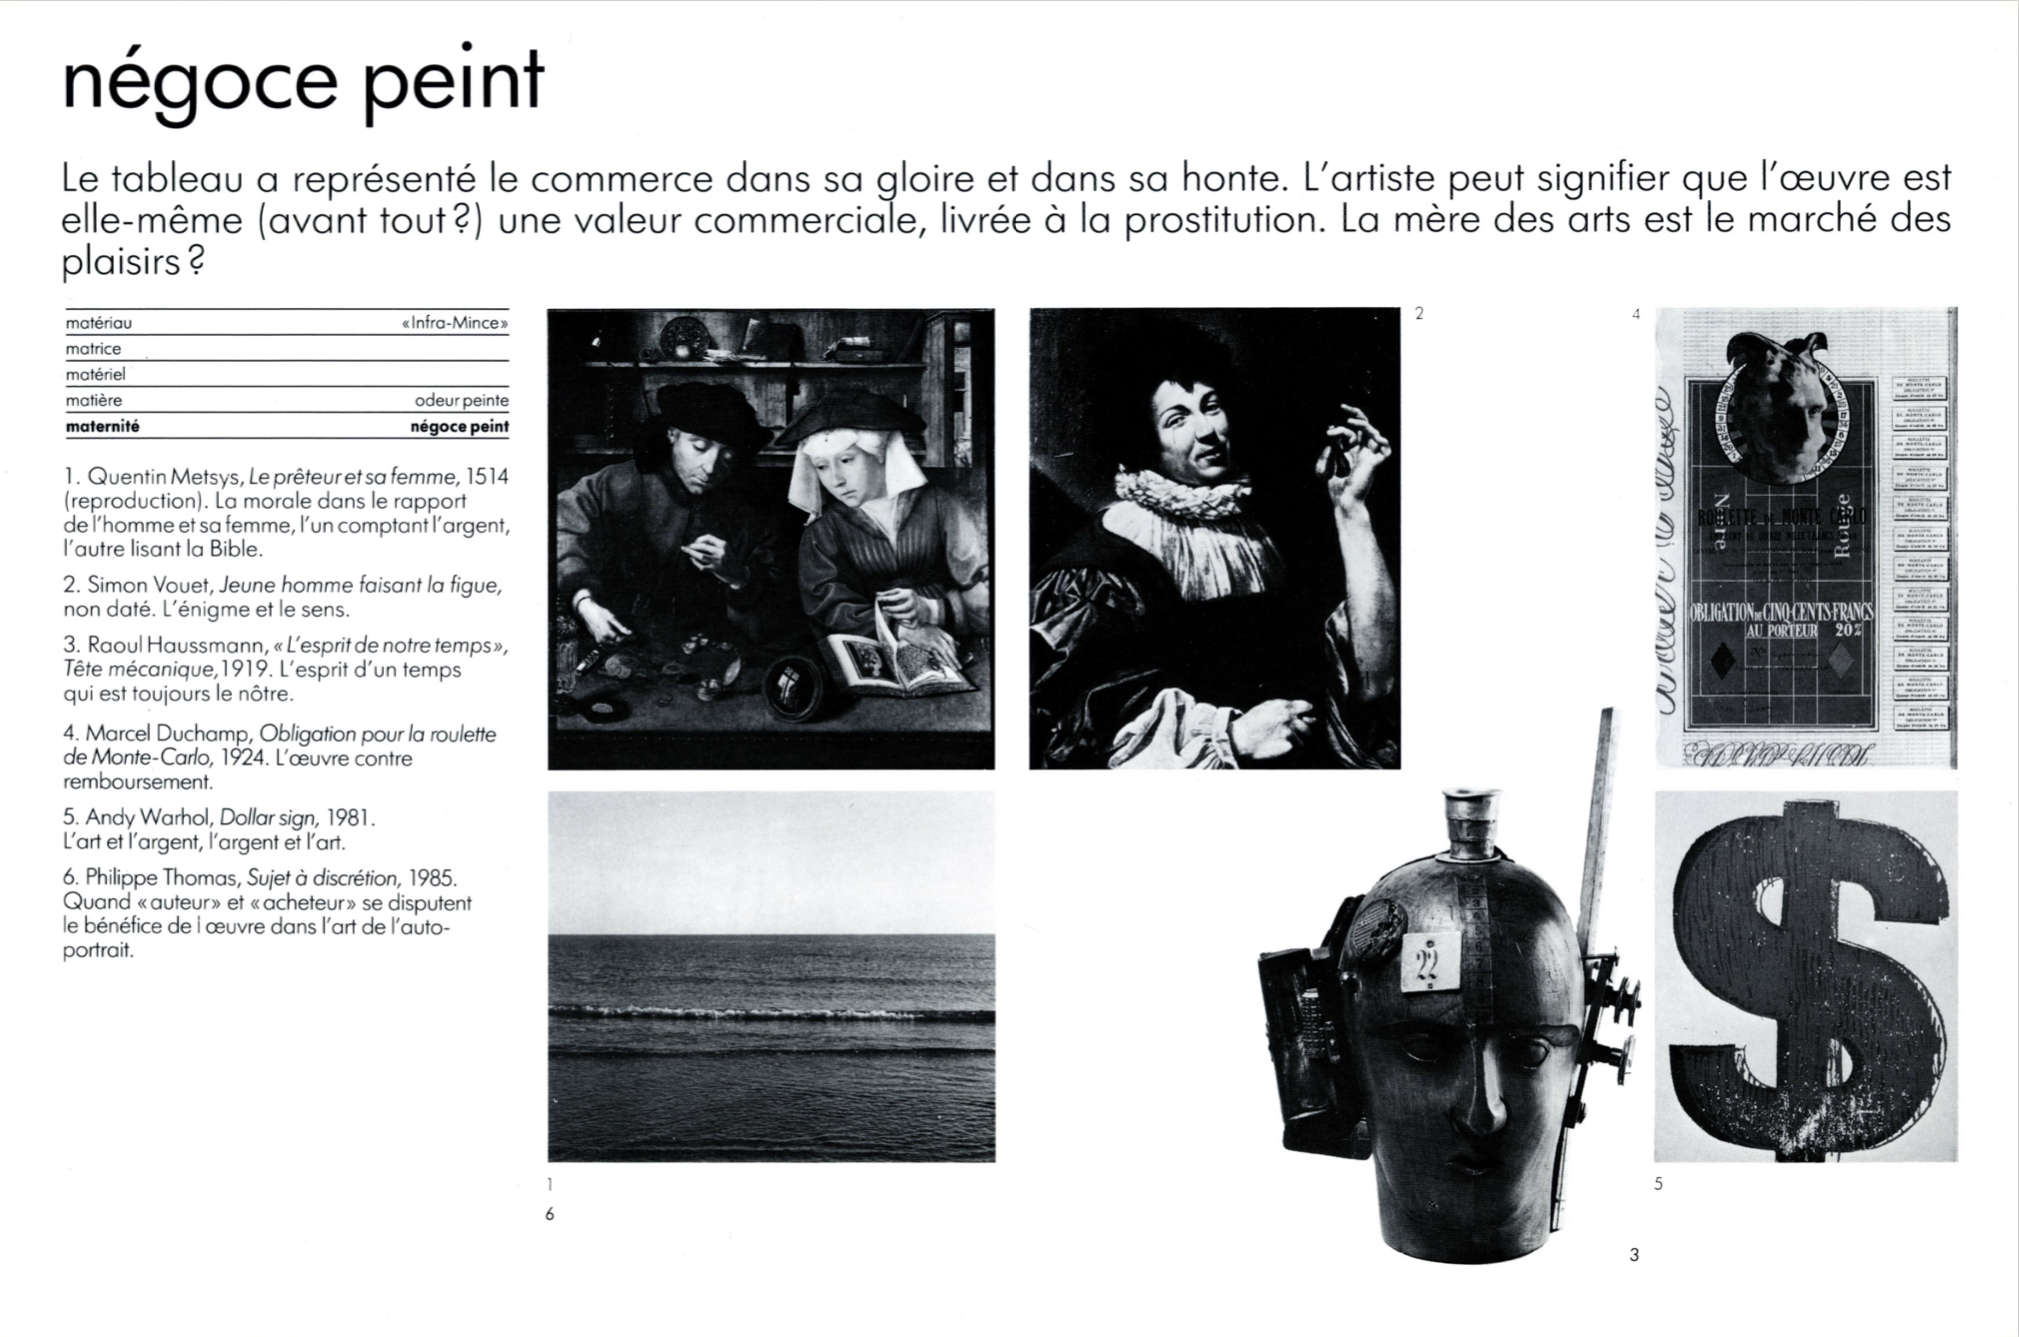 Jean-François Lyotard, “Les Immateriaux Album et Inventaire”, Paris, Centre Pompidou, 1985, p. 105